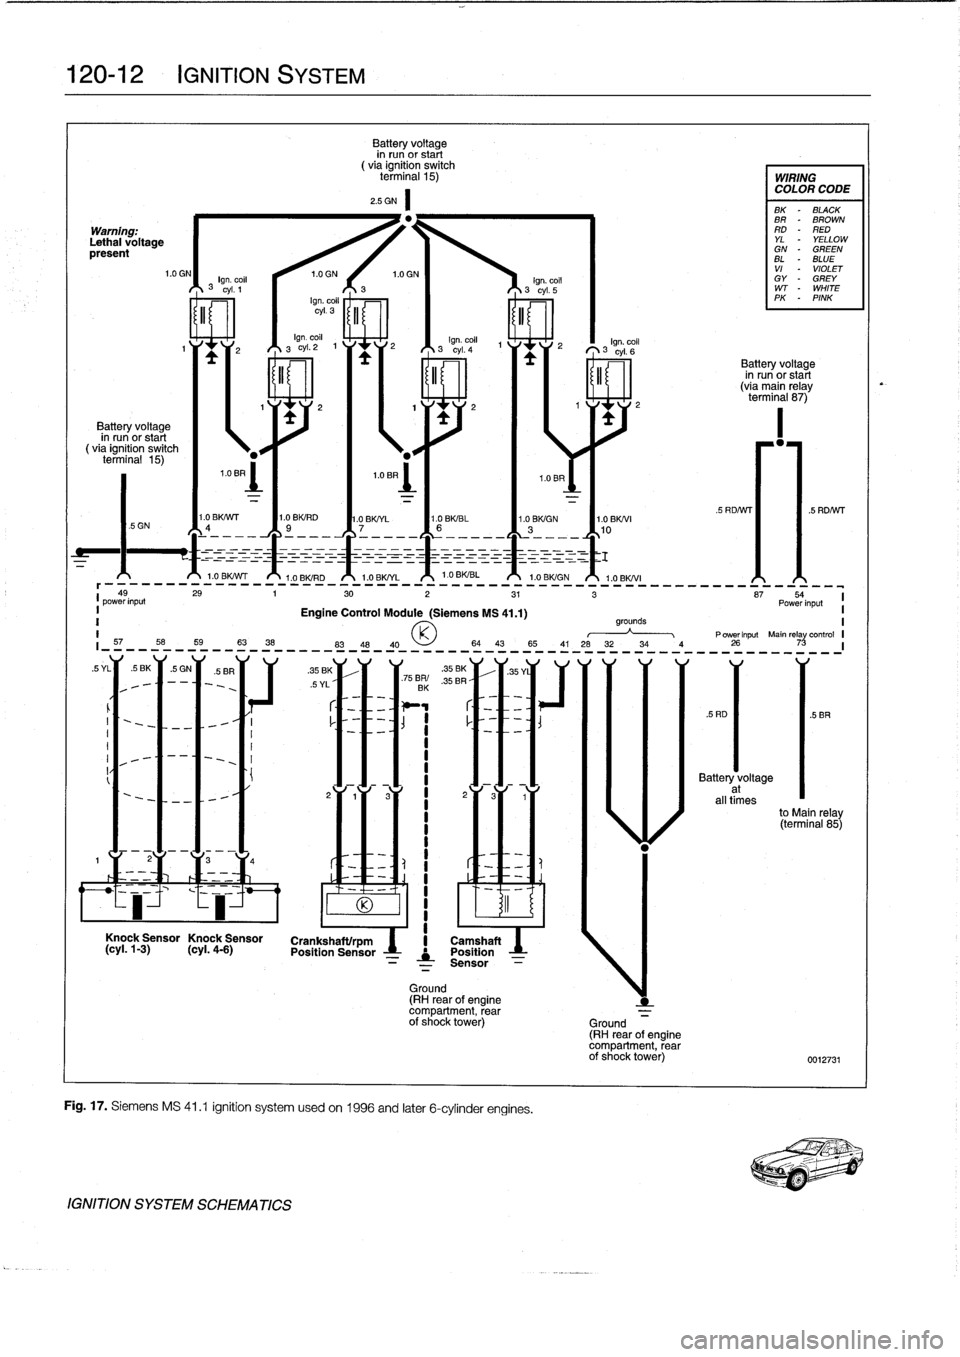 BMW 323i 1995 E36 Workshop Manual 
120-12

	

IGNITION
SYSTEM

Warning
.
Lethal
voltagepresent

Battery
voltage
in
run
or
start
(via
ignitíon
switch
terminal
15)

I
t

IGNITION
SYSTEM
SCHEMATICS

Battery
voltage
in
run
or
start
(
via